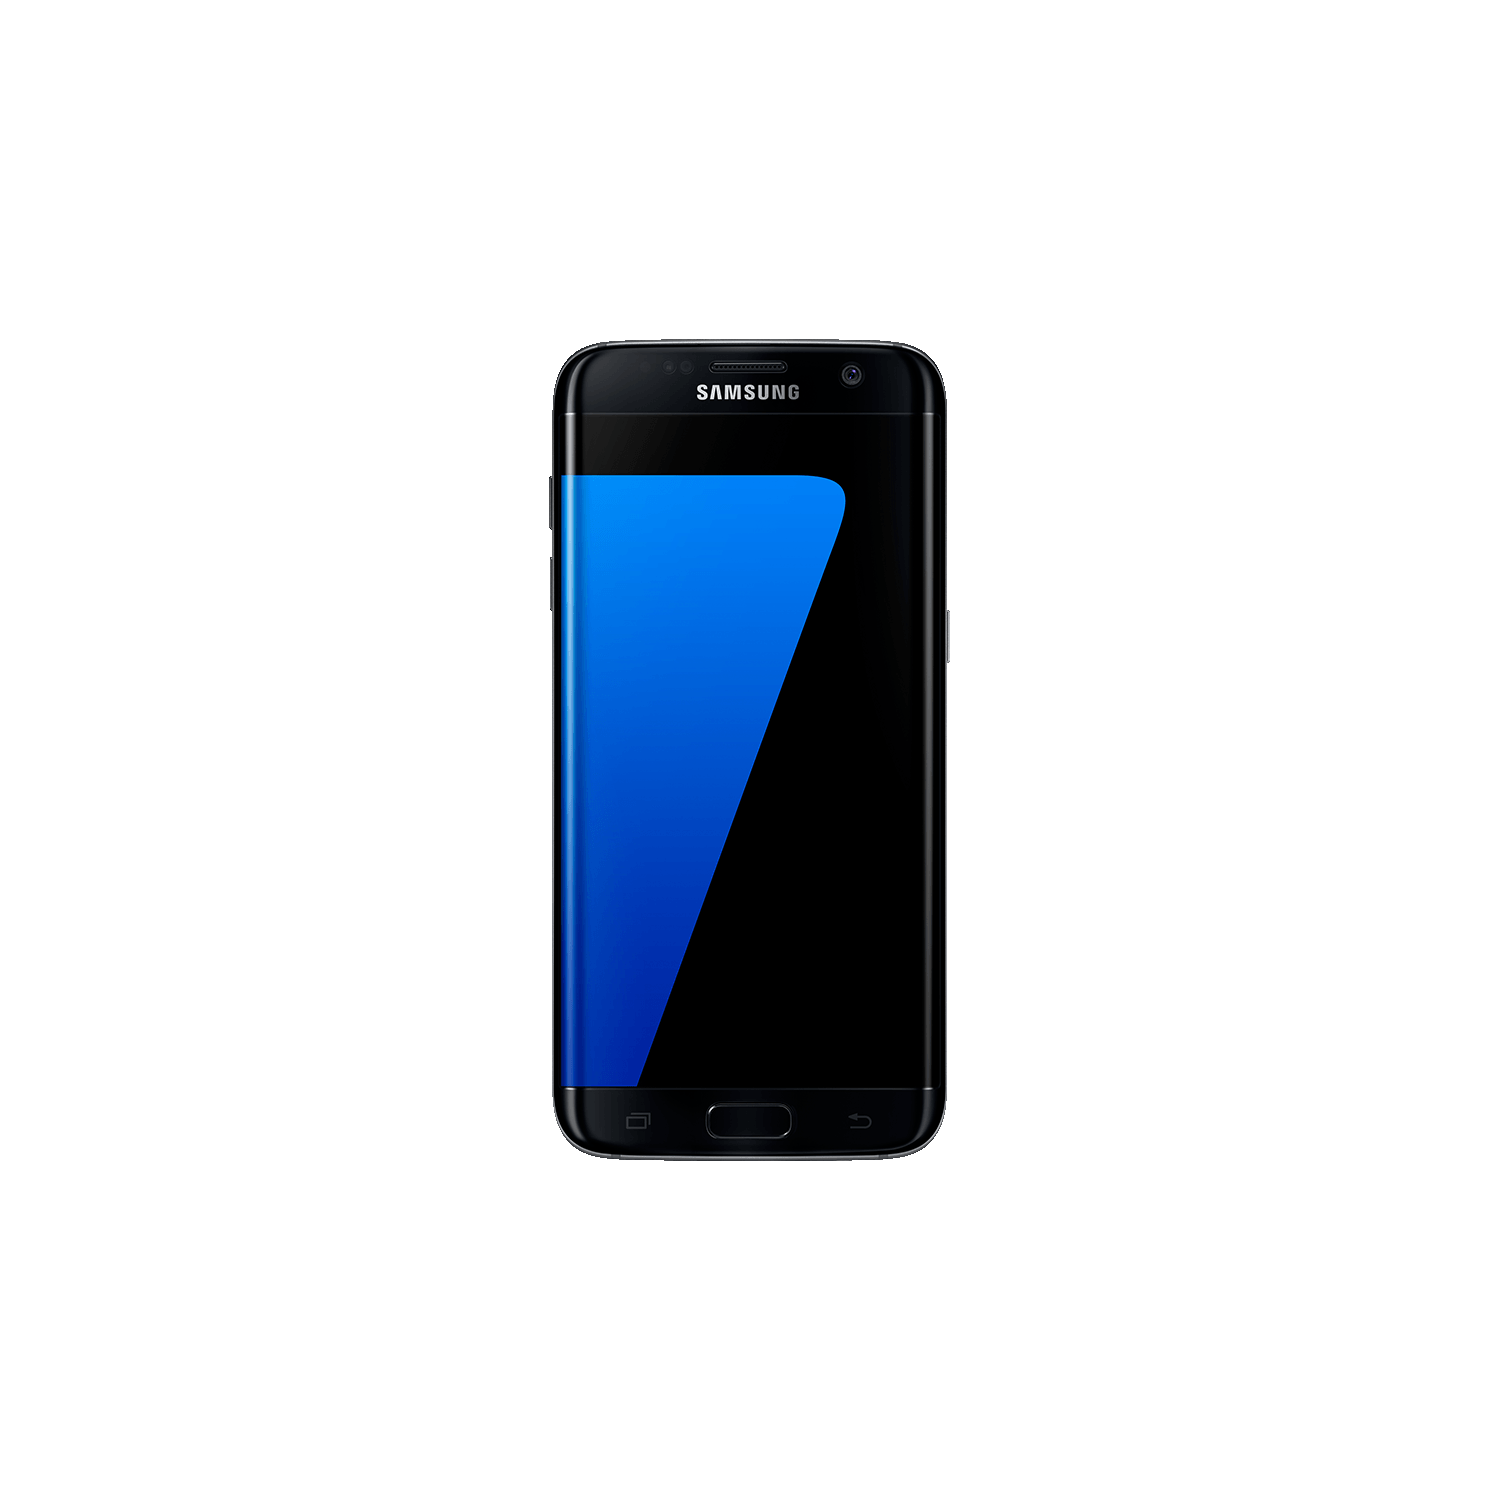 Refurbished (Good) - Samsung Galaxy S7 edge 32GB Smartphone - Black Onyx - Unlocked - Certified Refurbished